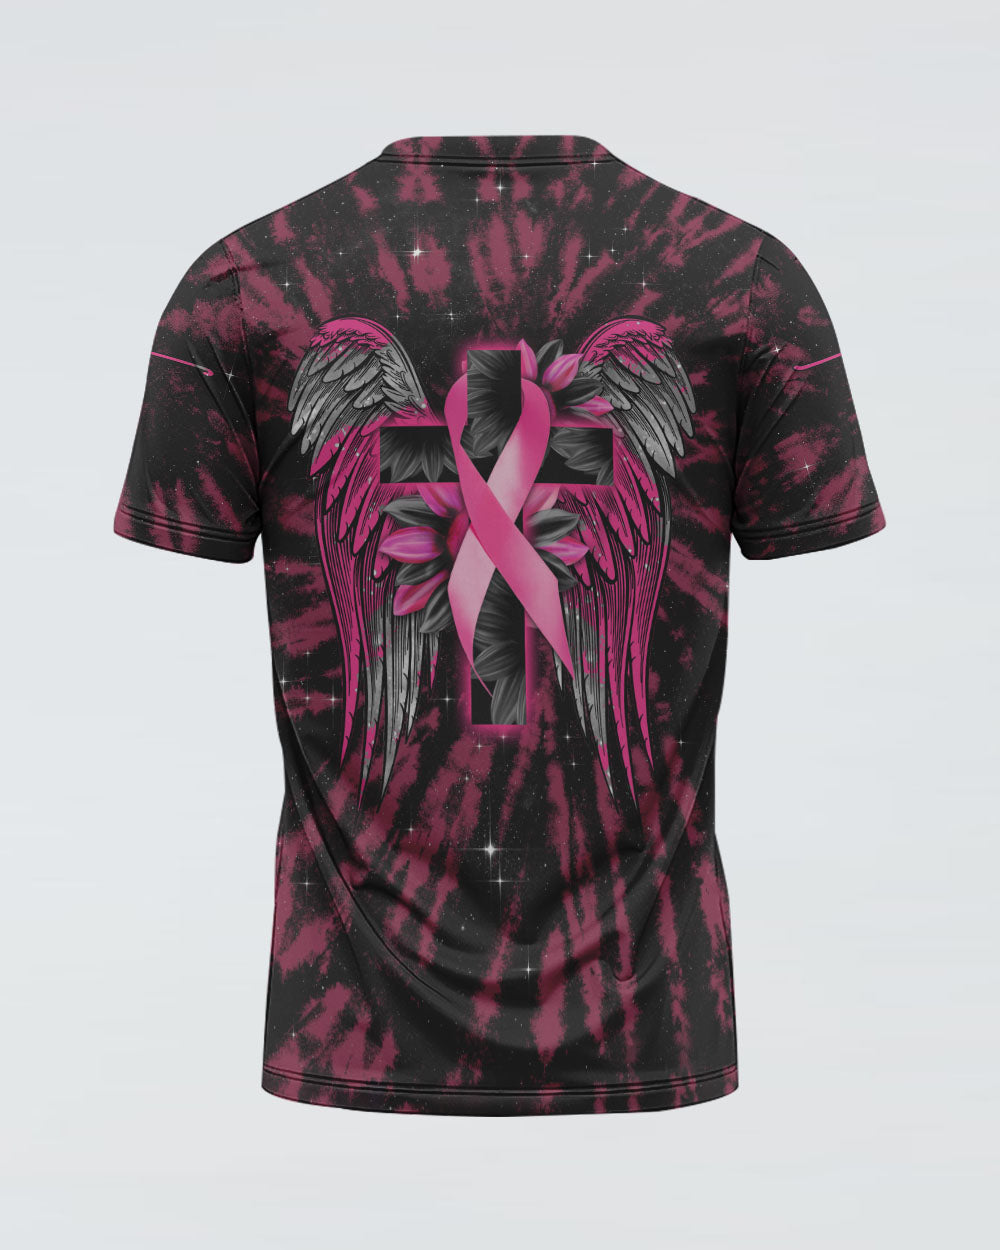 Cross Wing Sunflower Tie Dye Pink Ribbon Women's Breast Cancer Awareness Tshirt